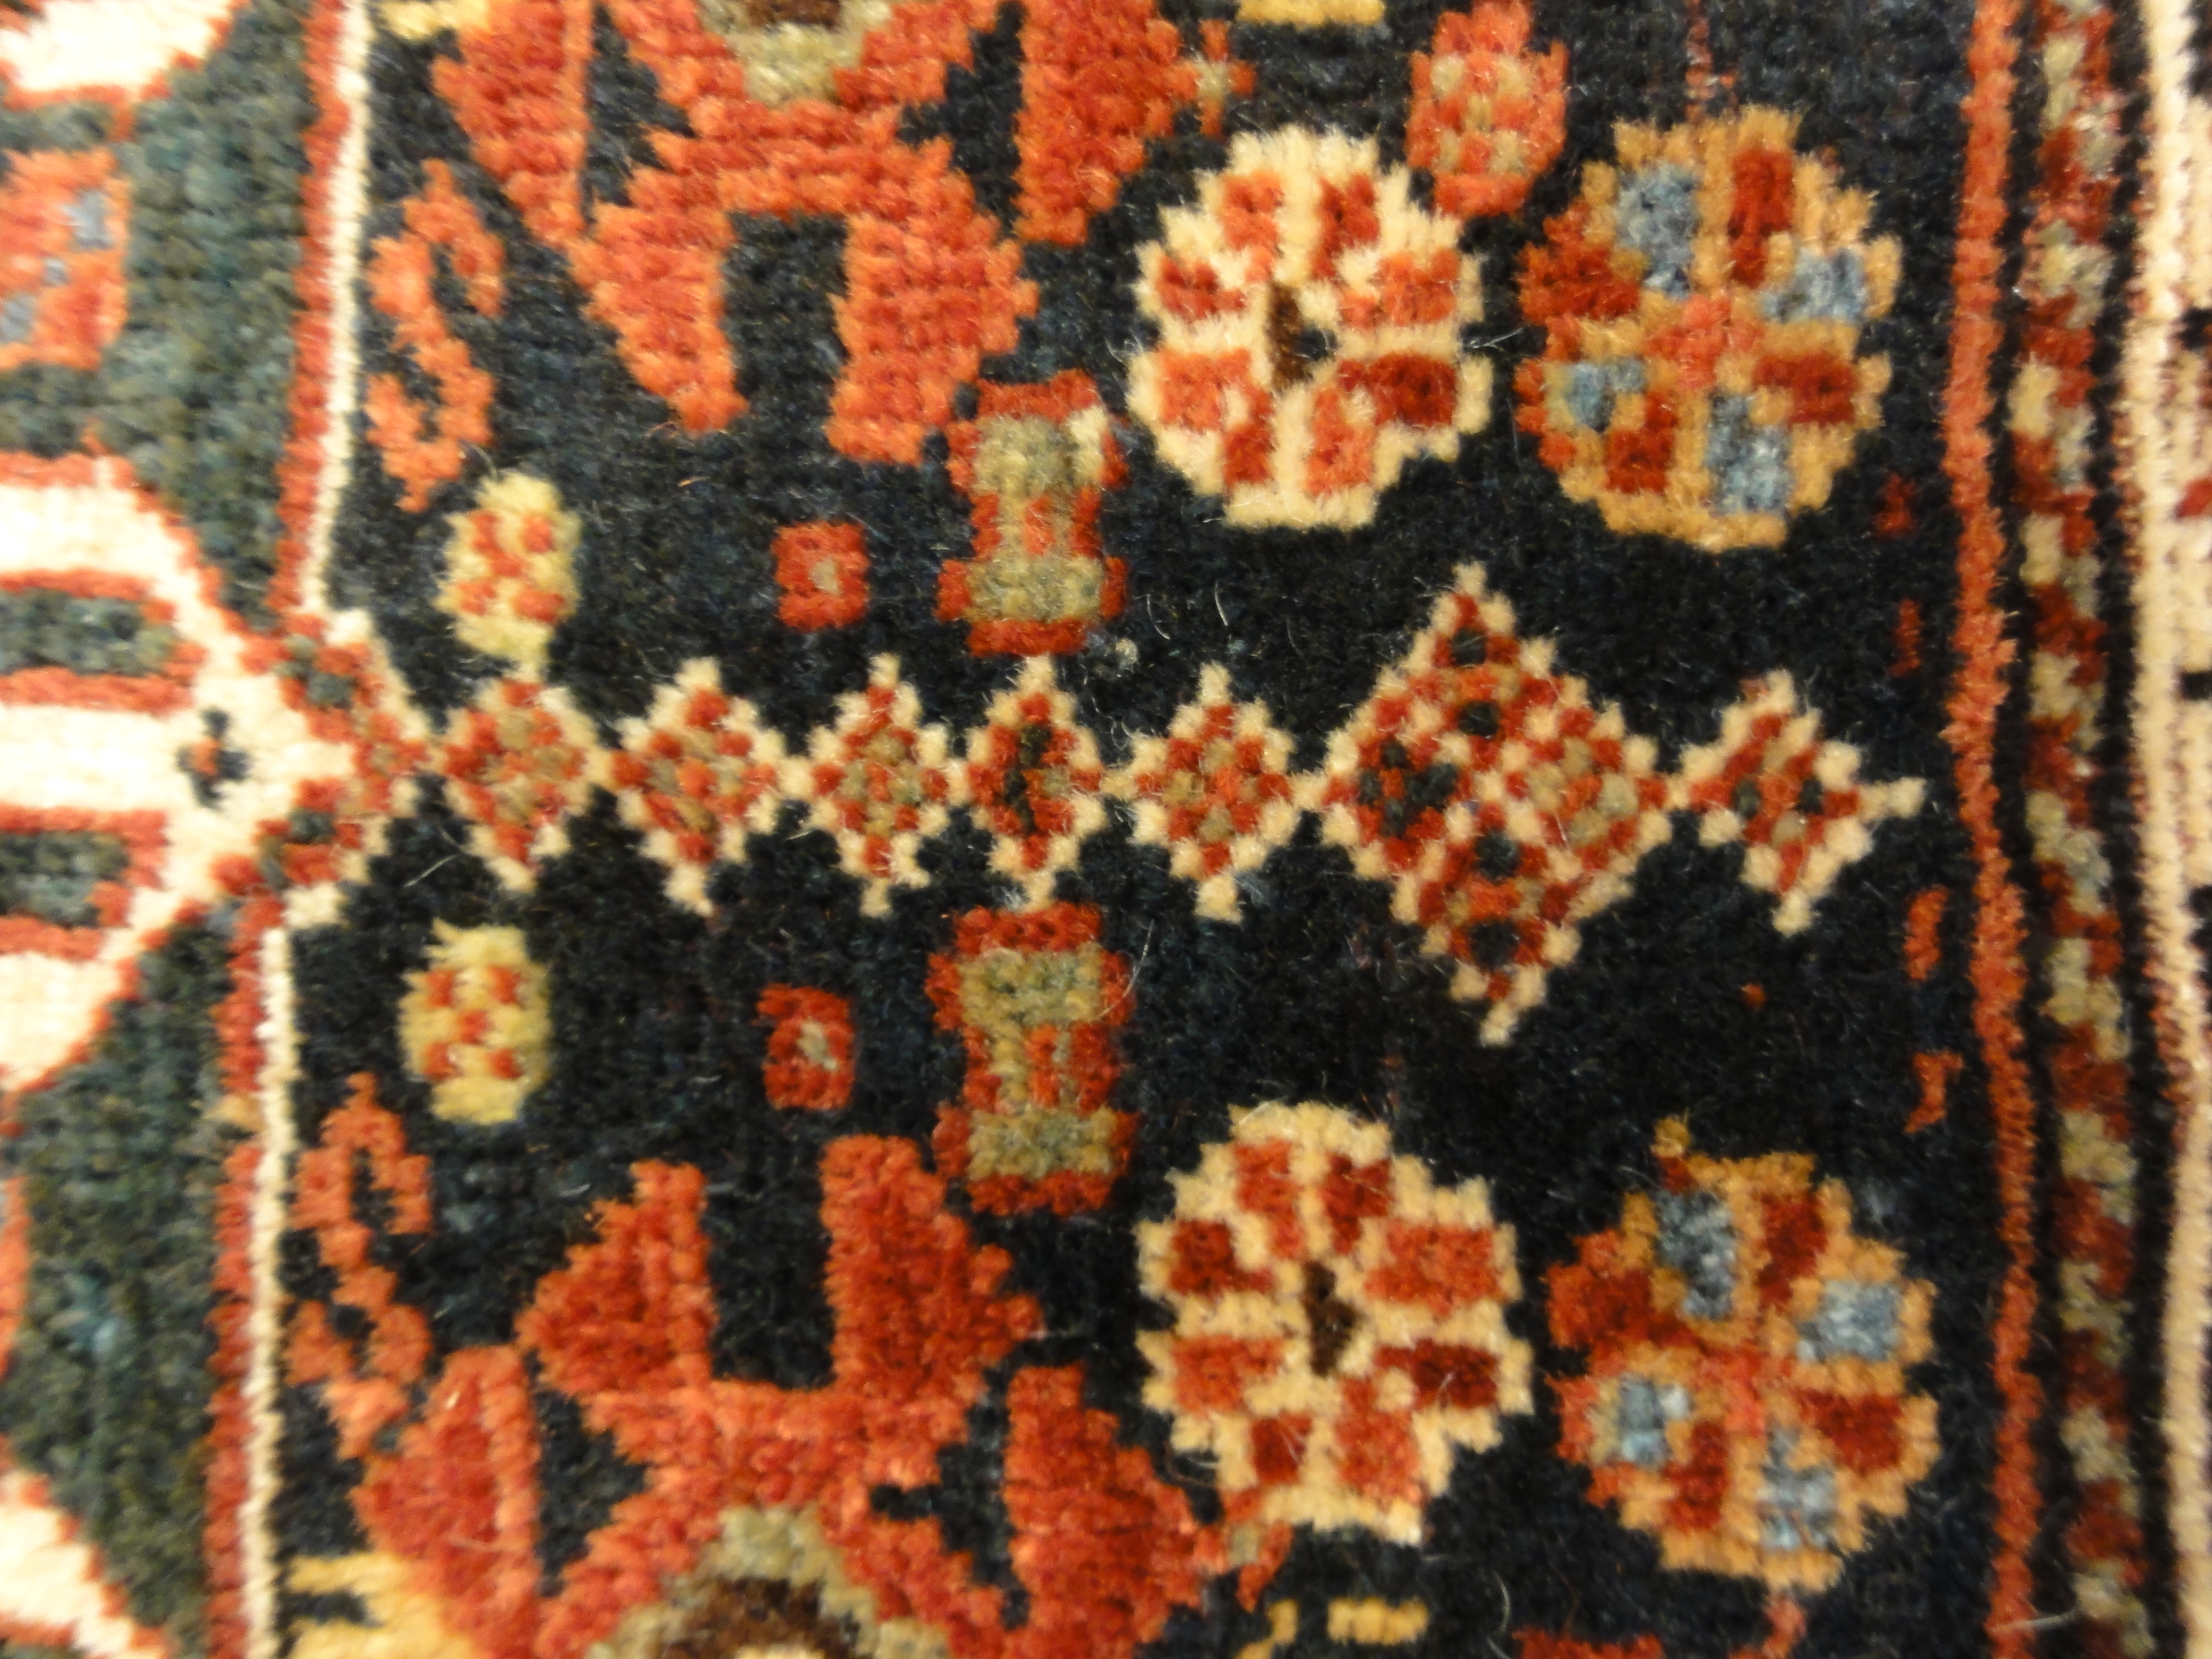 Antique Khamseh Southwest Persian Bagface. A piece of antique woven carpet art sold by Santa Barbara Design Center Rugs and More in Santa Barbara, CA.